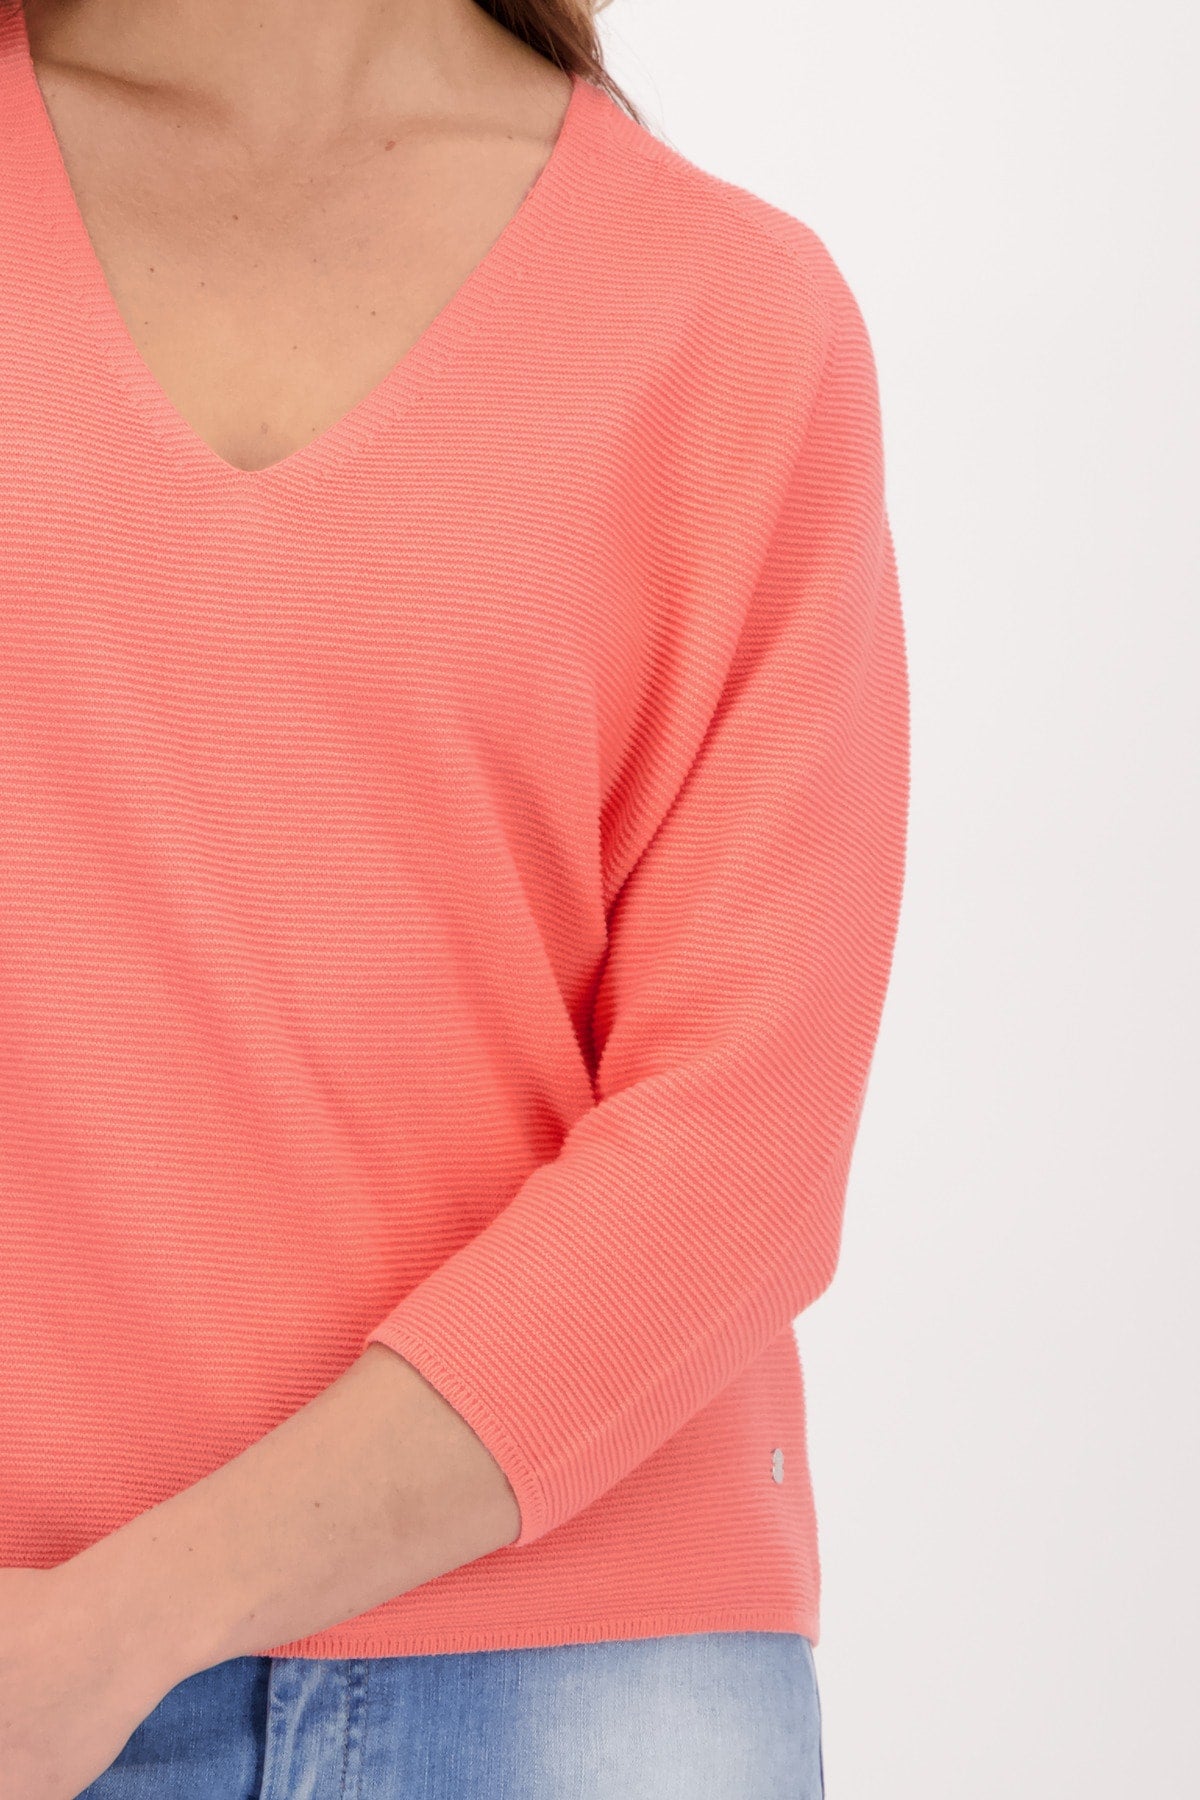 Monari - Knit Sweater